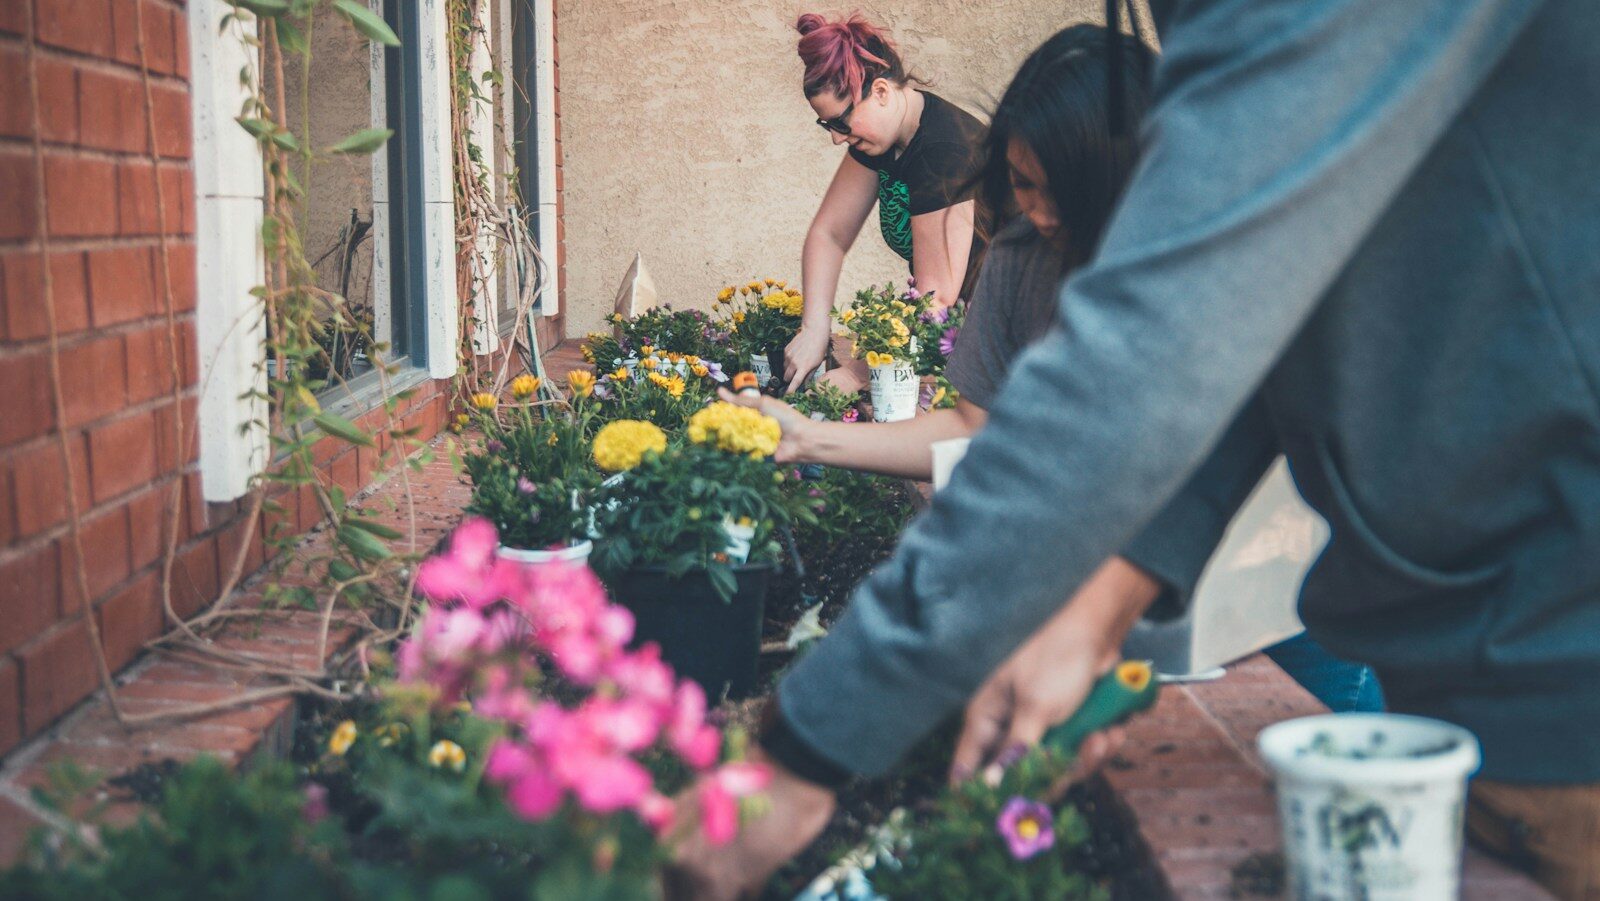 Image description: three people planting flowers. Studies link volunteerism to increased workplace well-being.